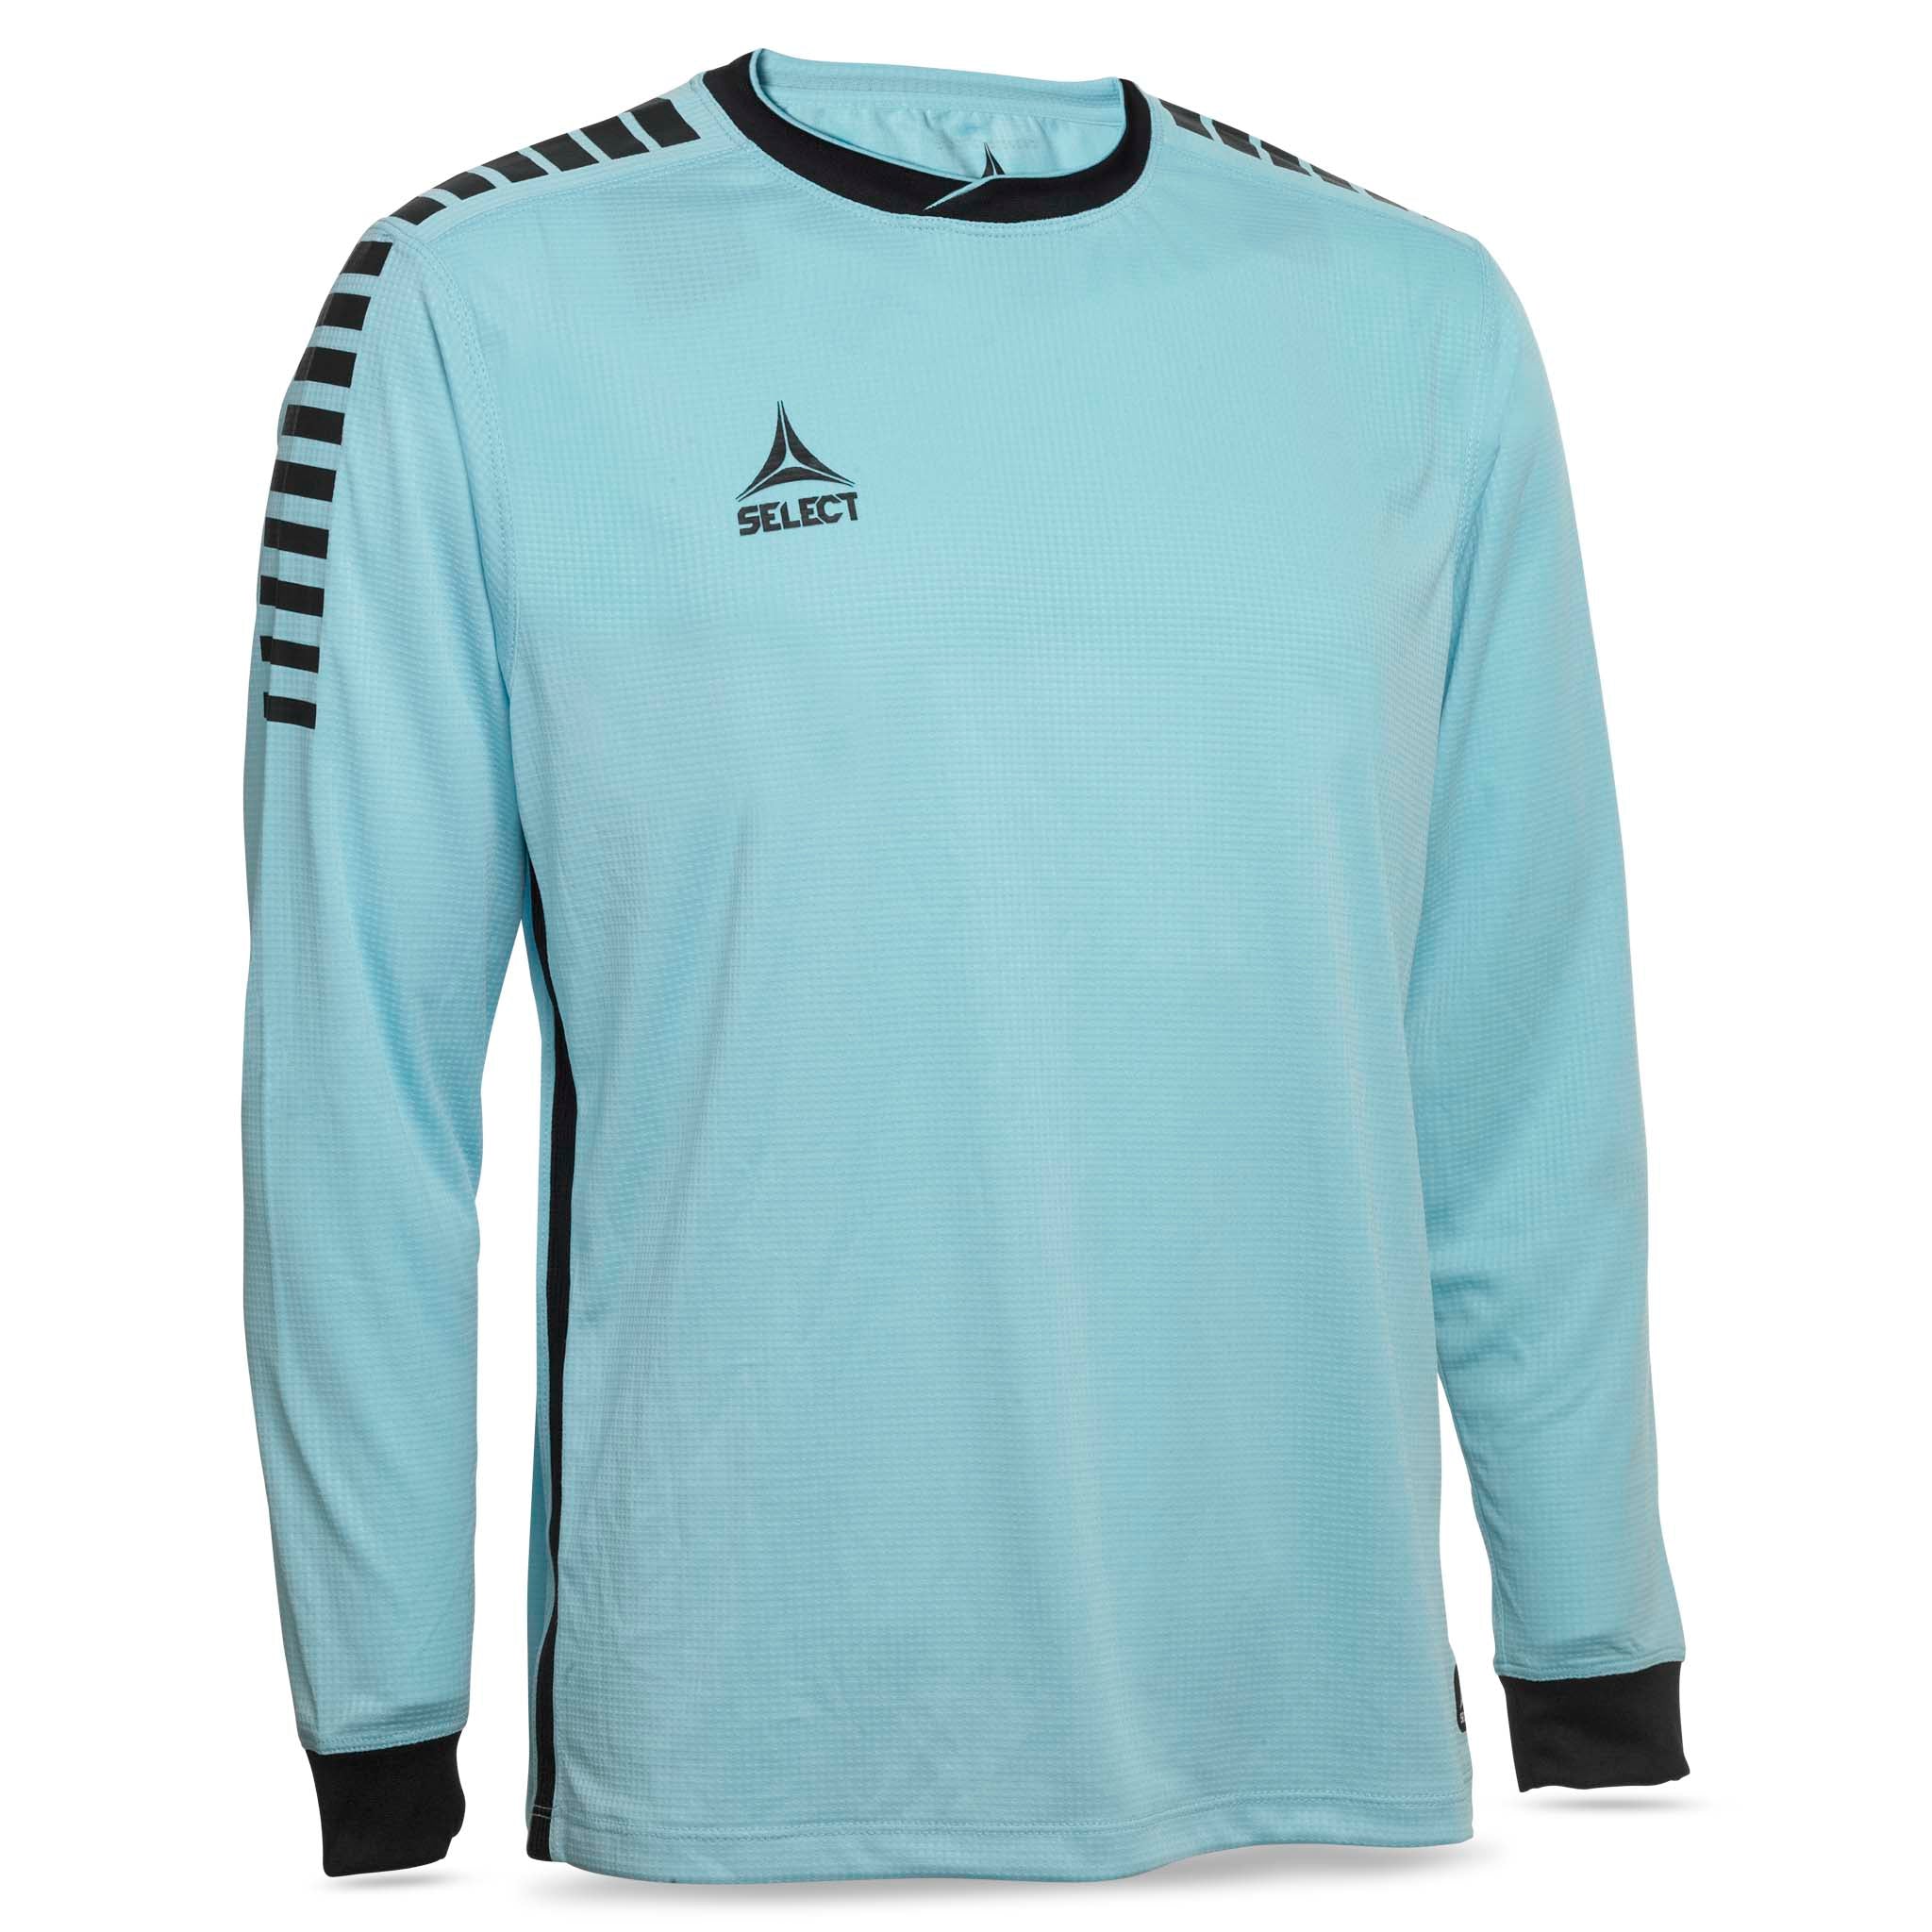 Goalkeeper shirt - Monaco, youth #colour_blue